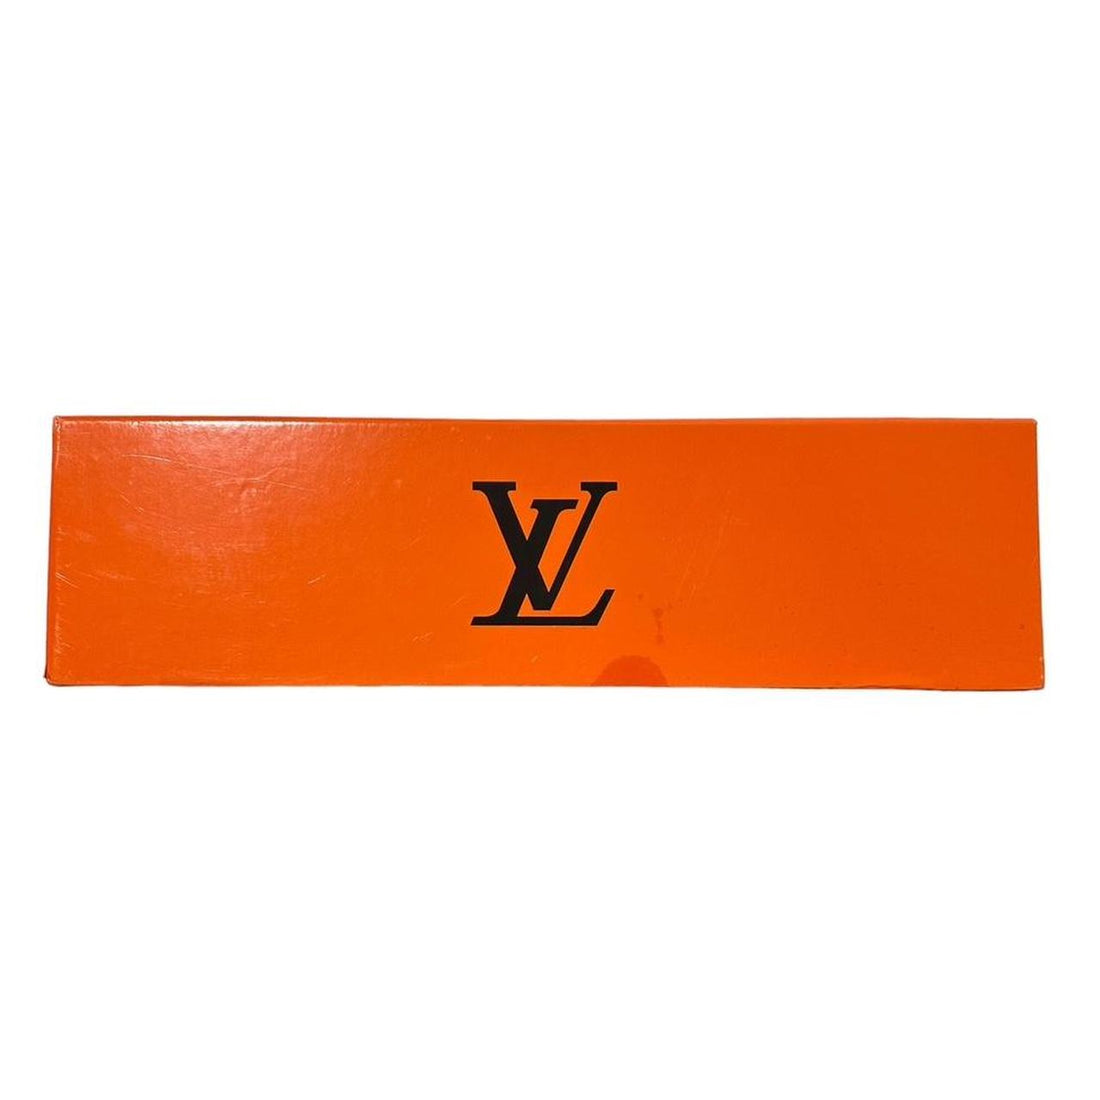 Louis Vuitton Virgil Abloh AW21 runway show Invitation gift